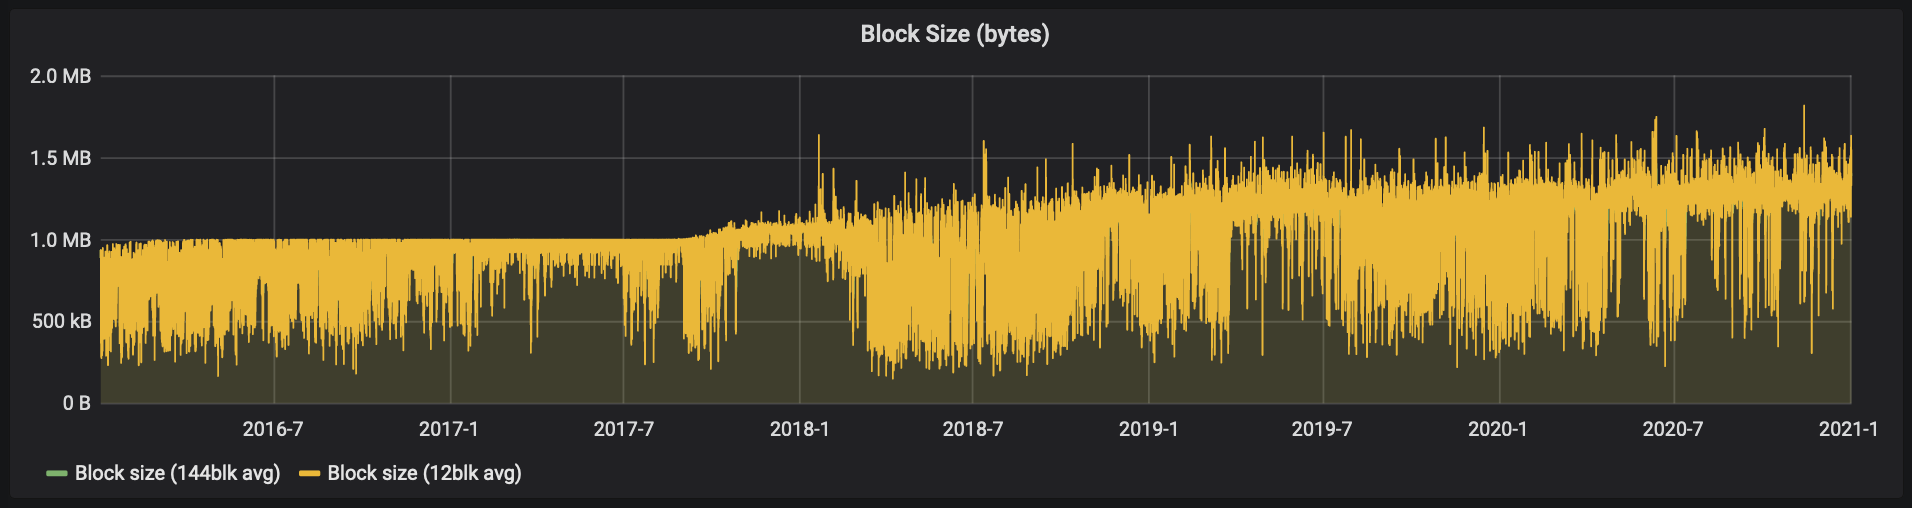 Blocksize-1.png